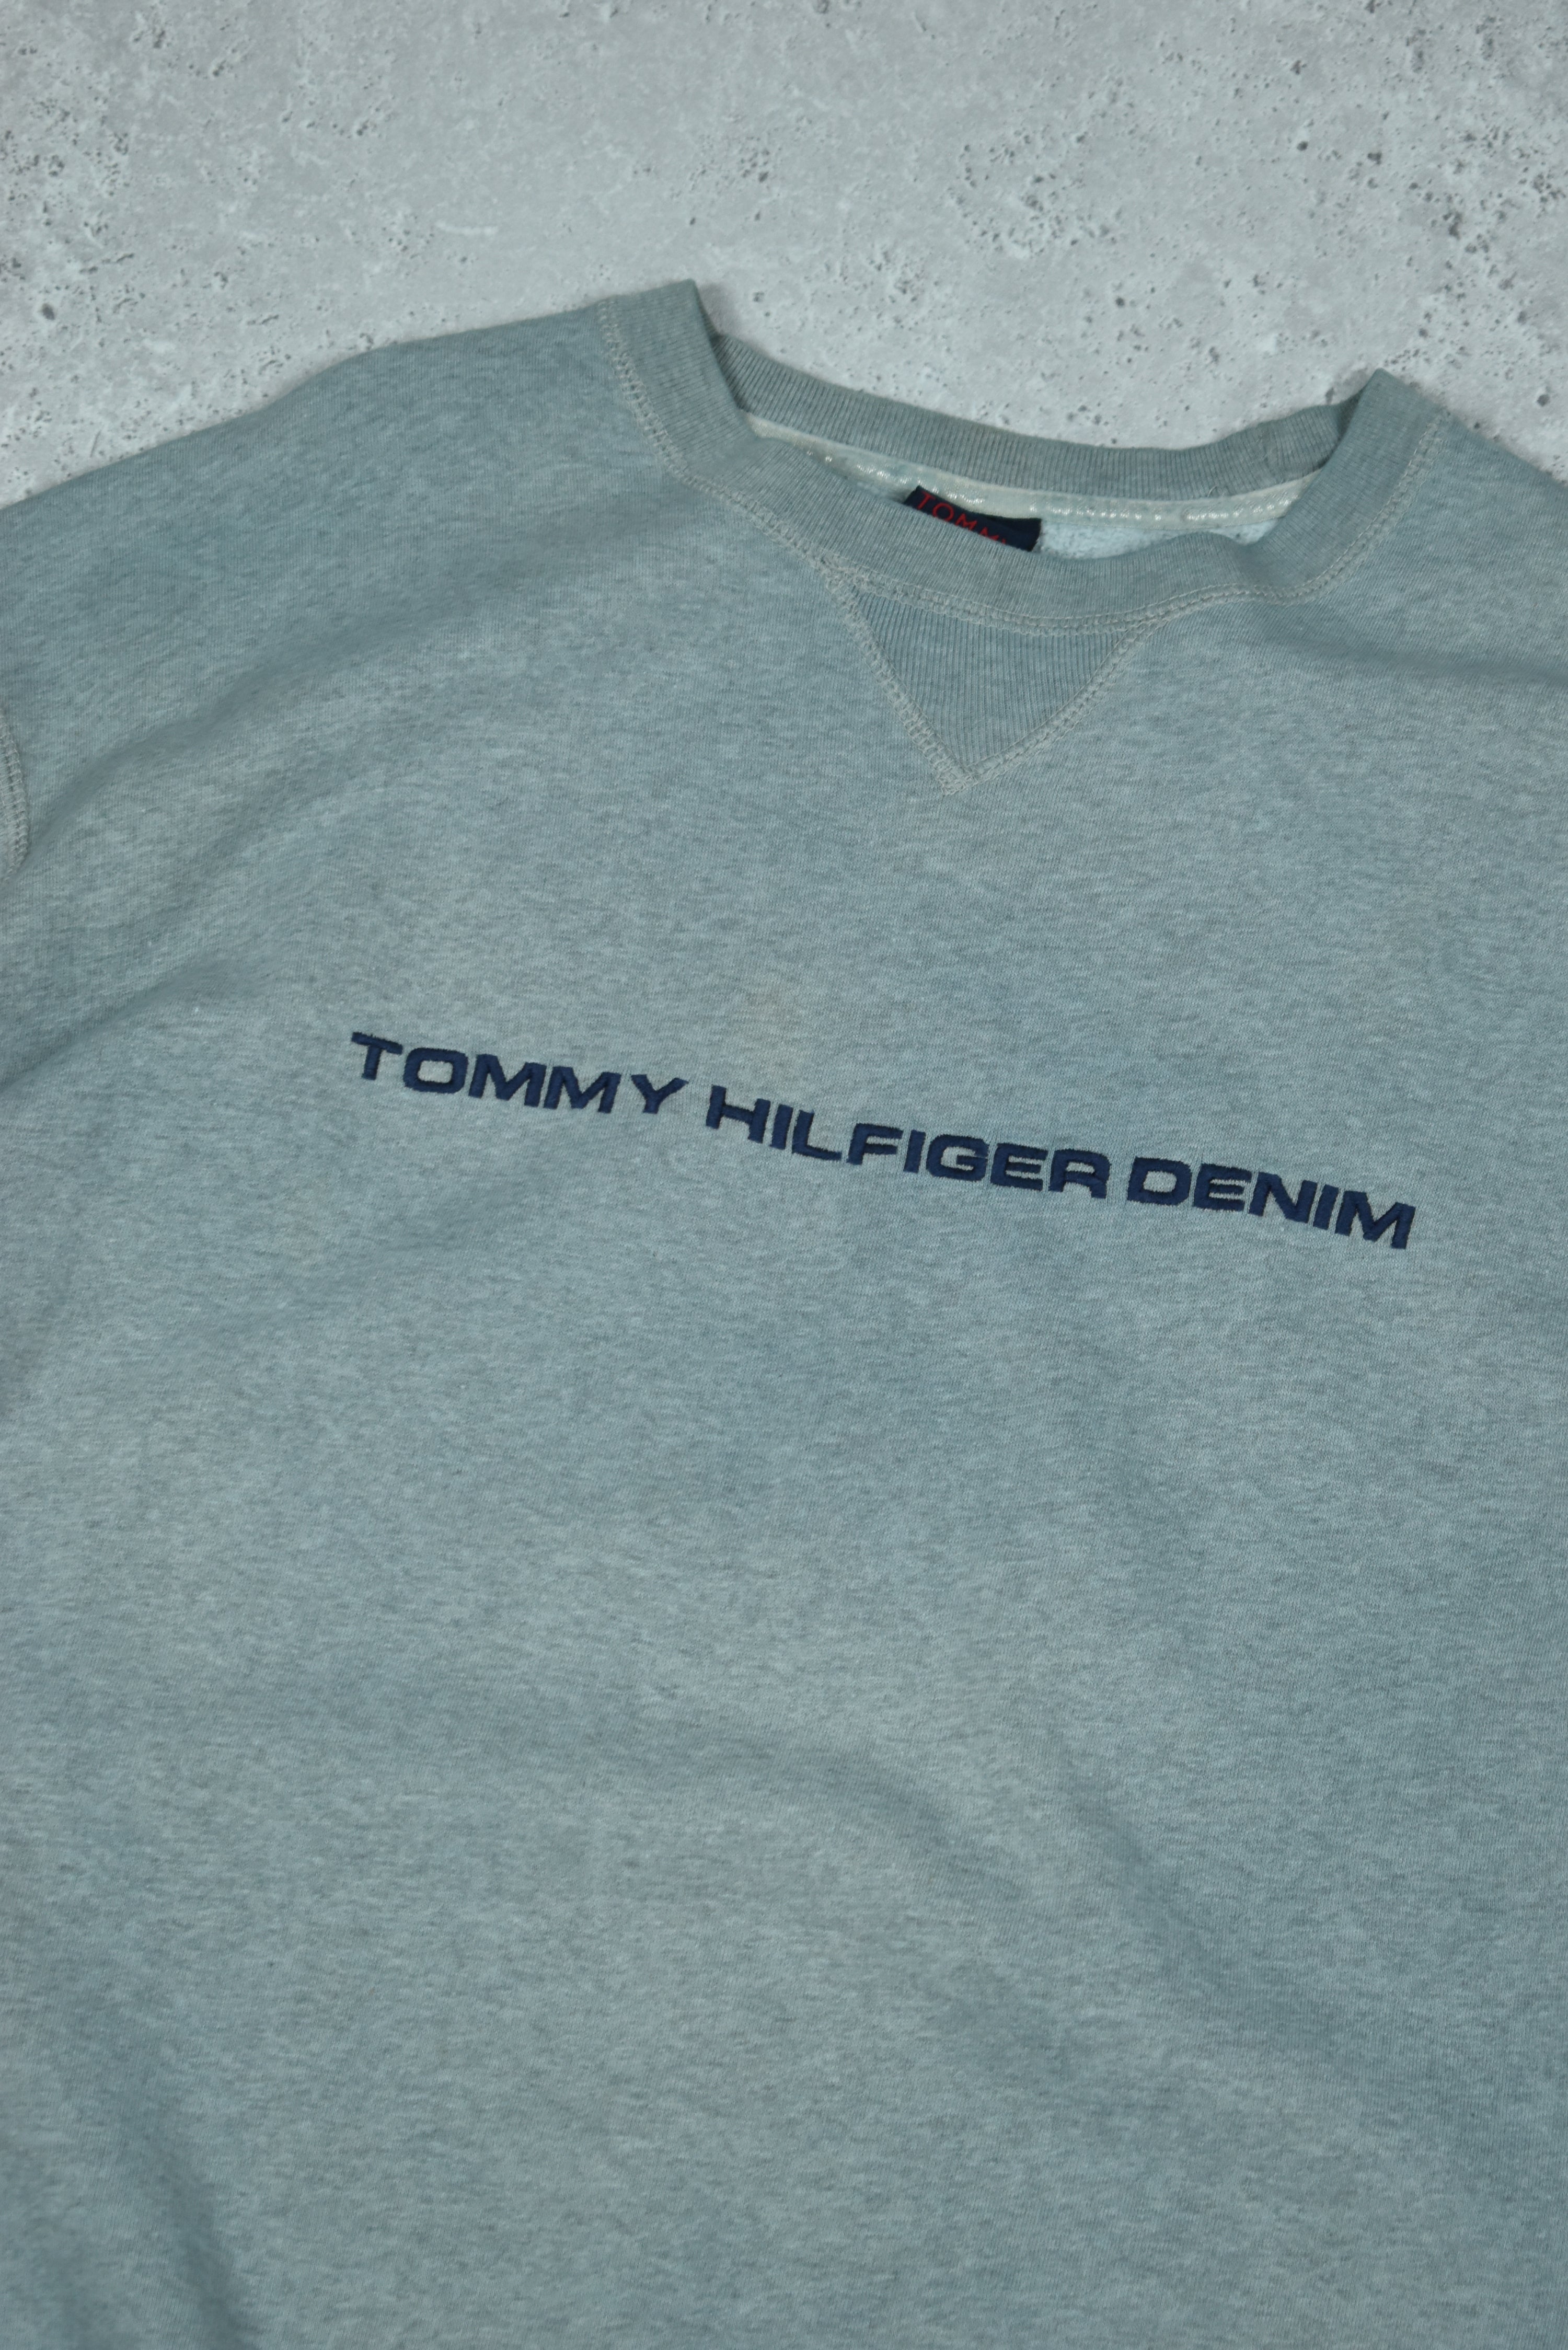 Vintage Tommy Hilfiger Embroidered Sweatshirt Medium